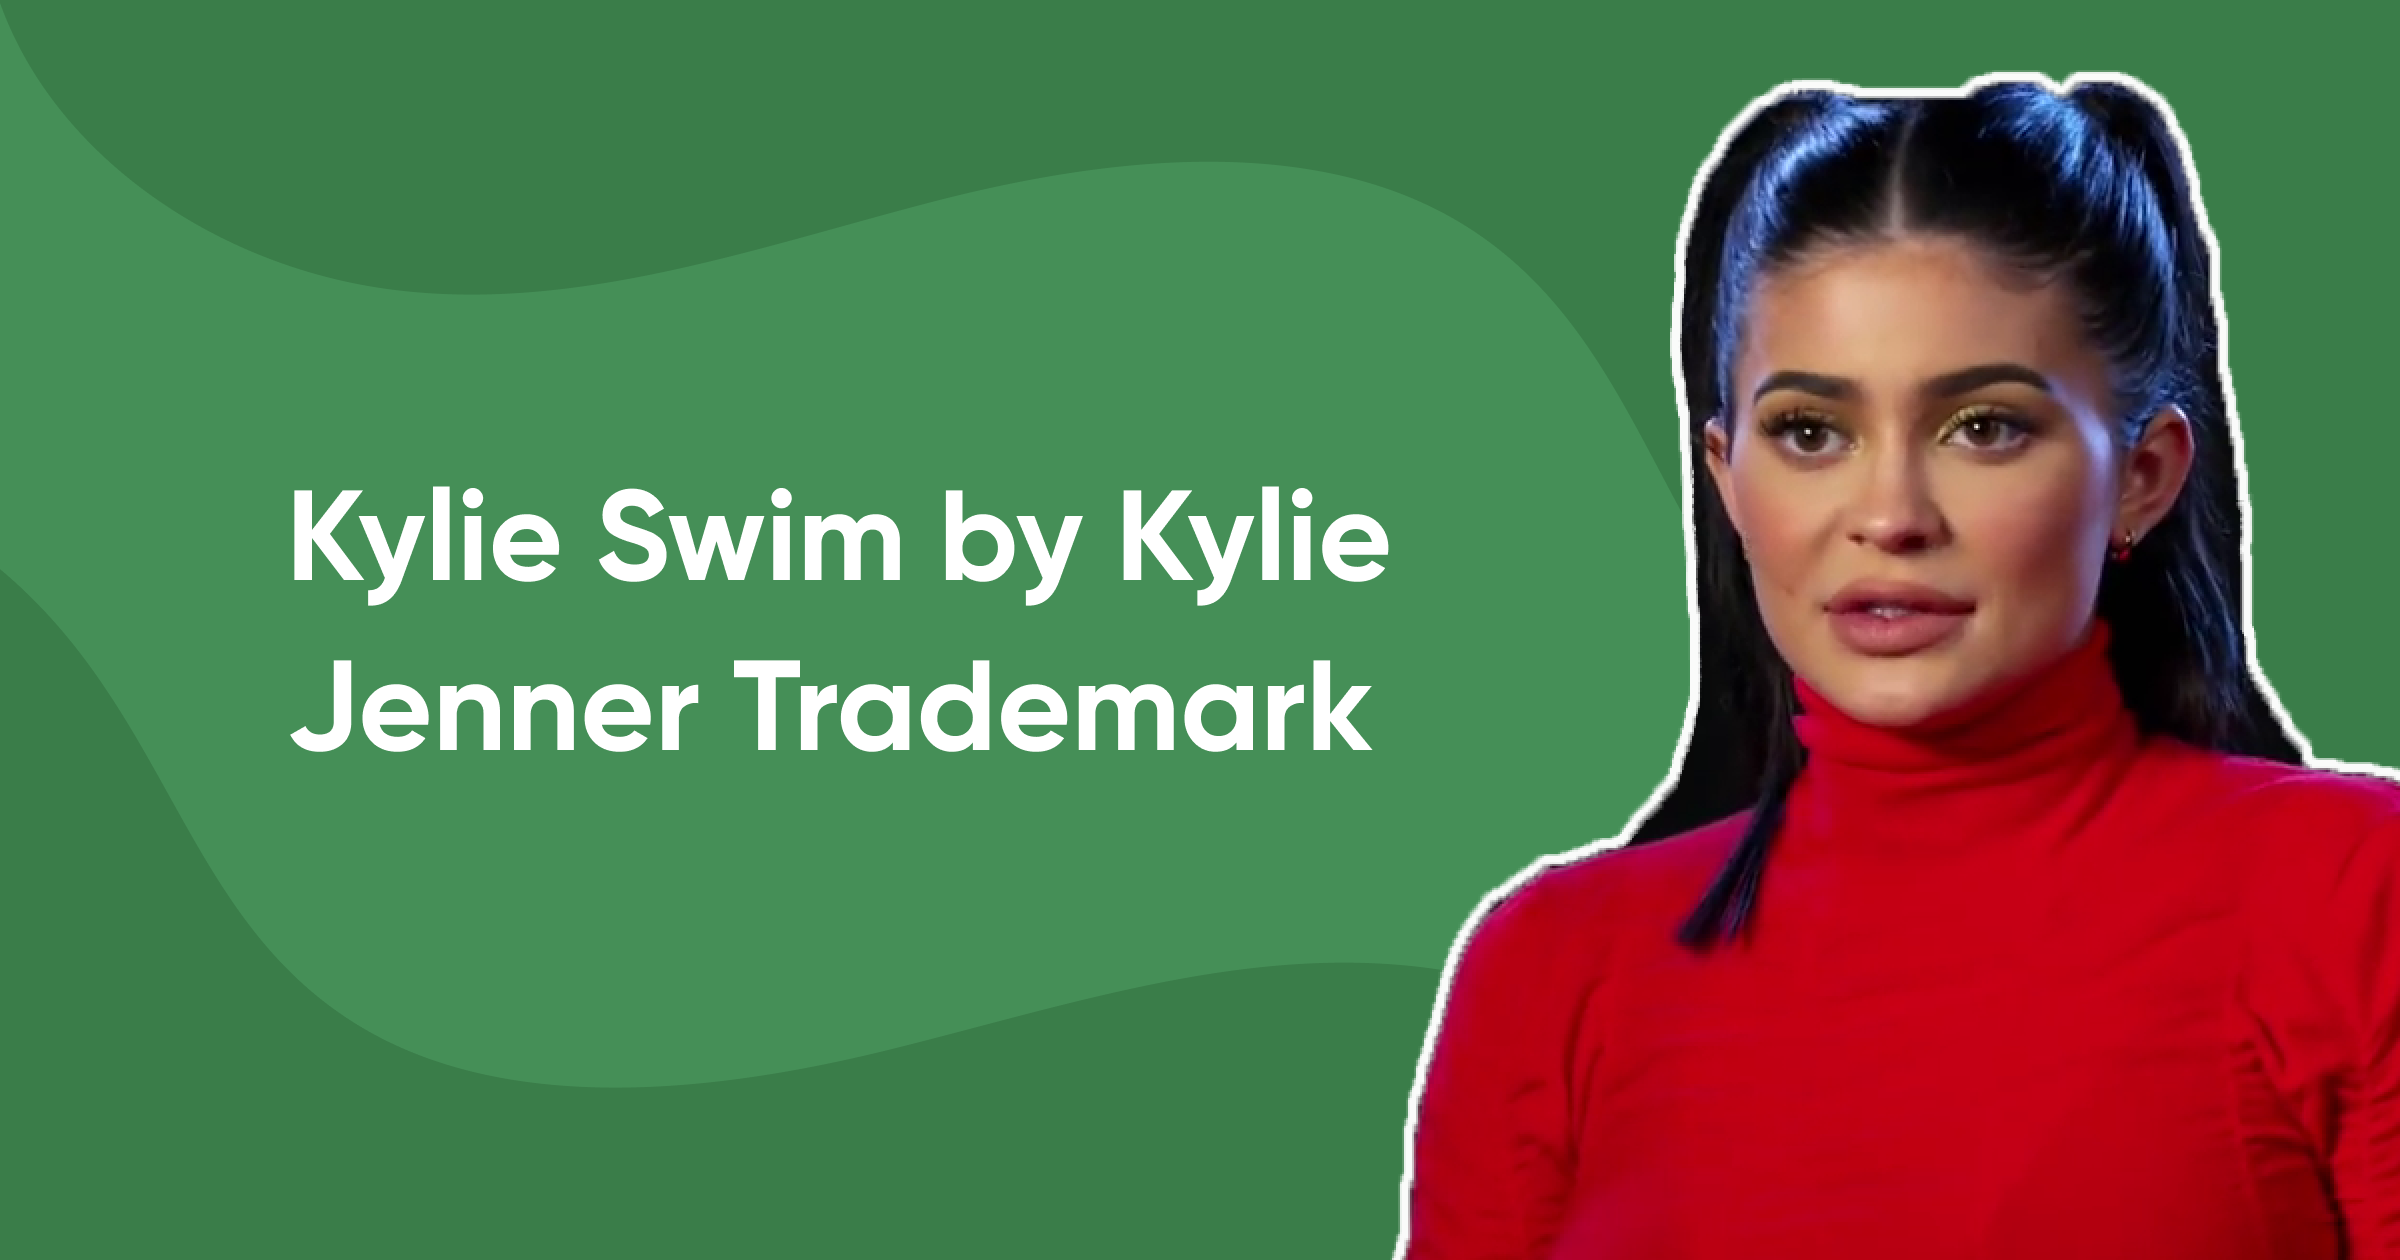 Kylie Swim by Kylie Jenner Trademark Filings: An Insight into Kylie Jenner's Swimwear Line